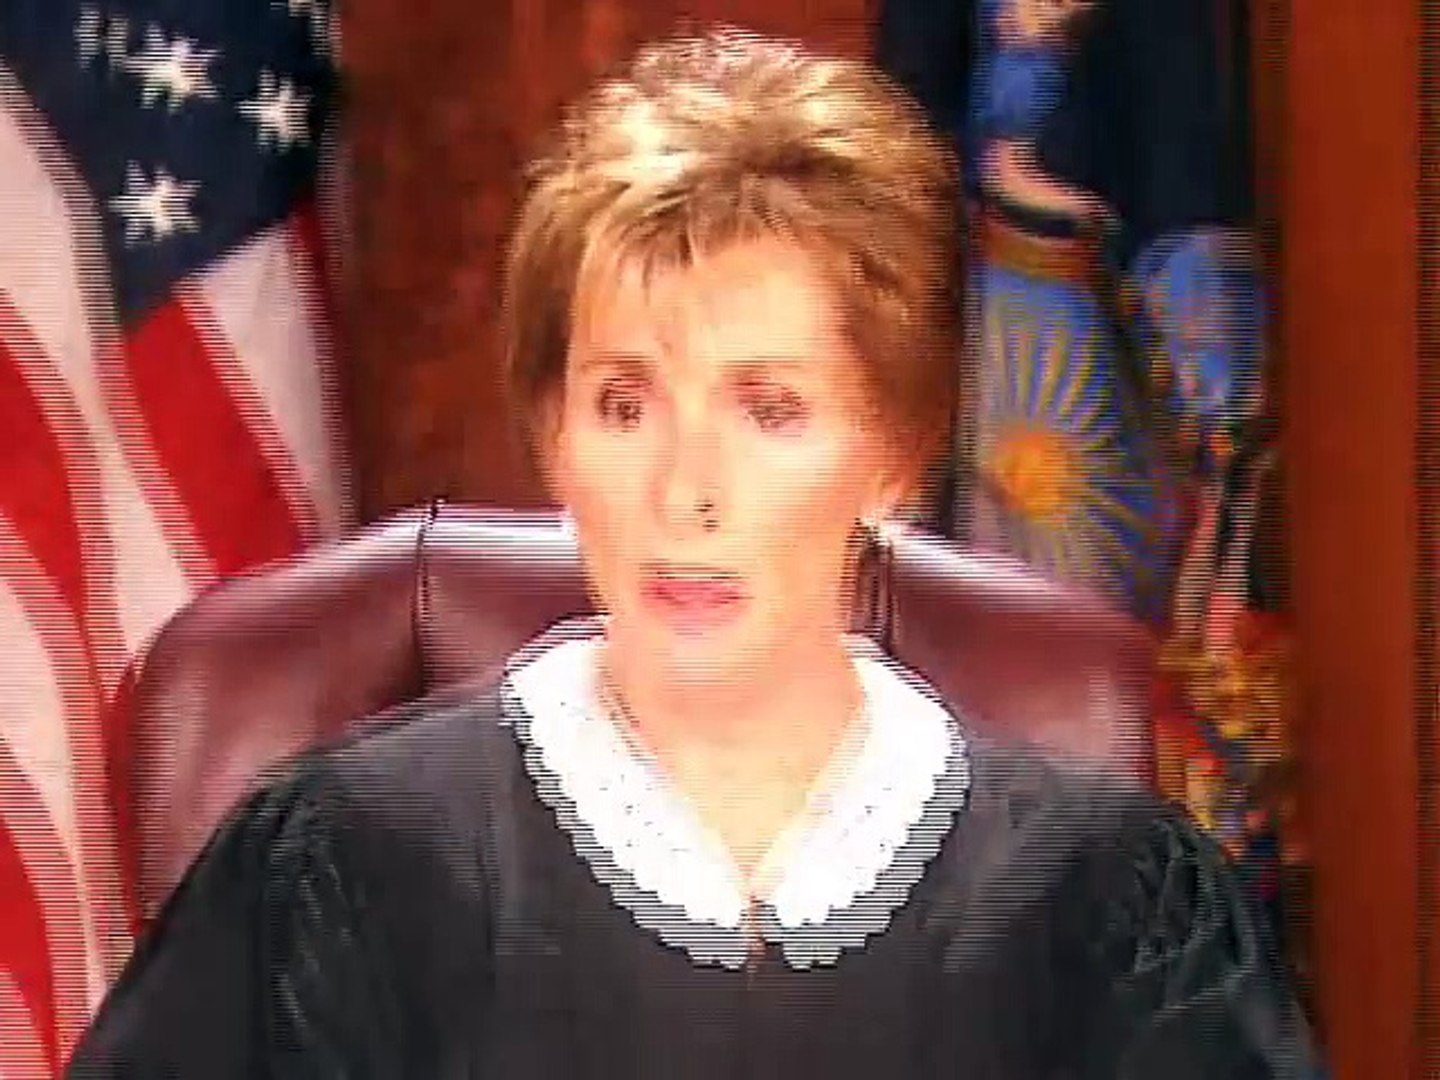 Judge Judy-isms!